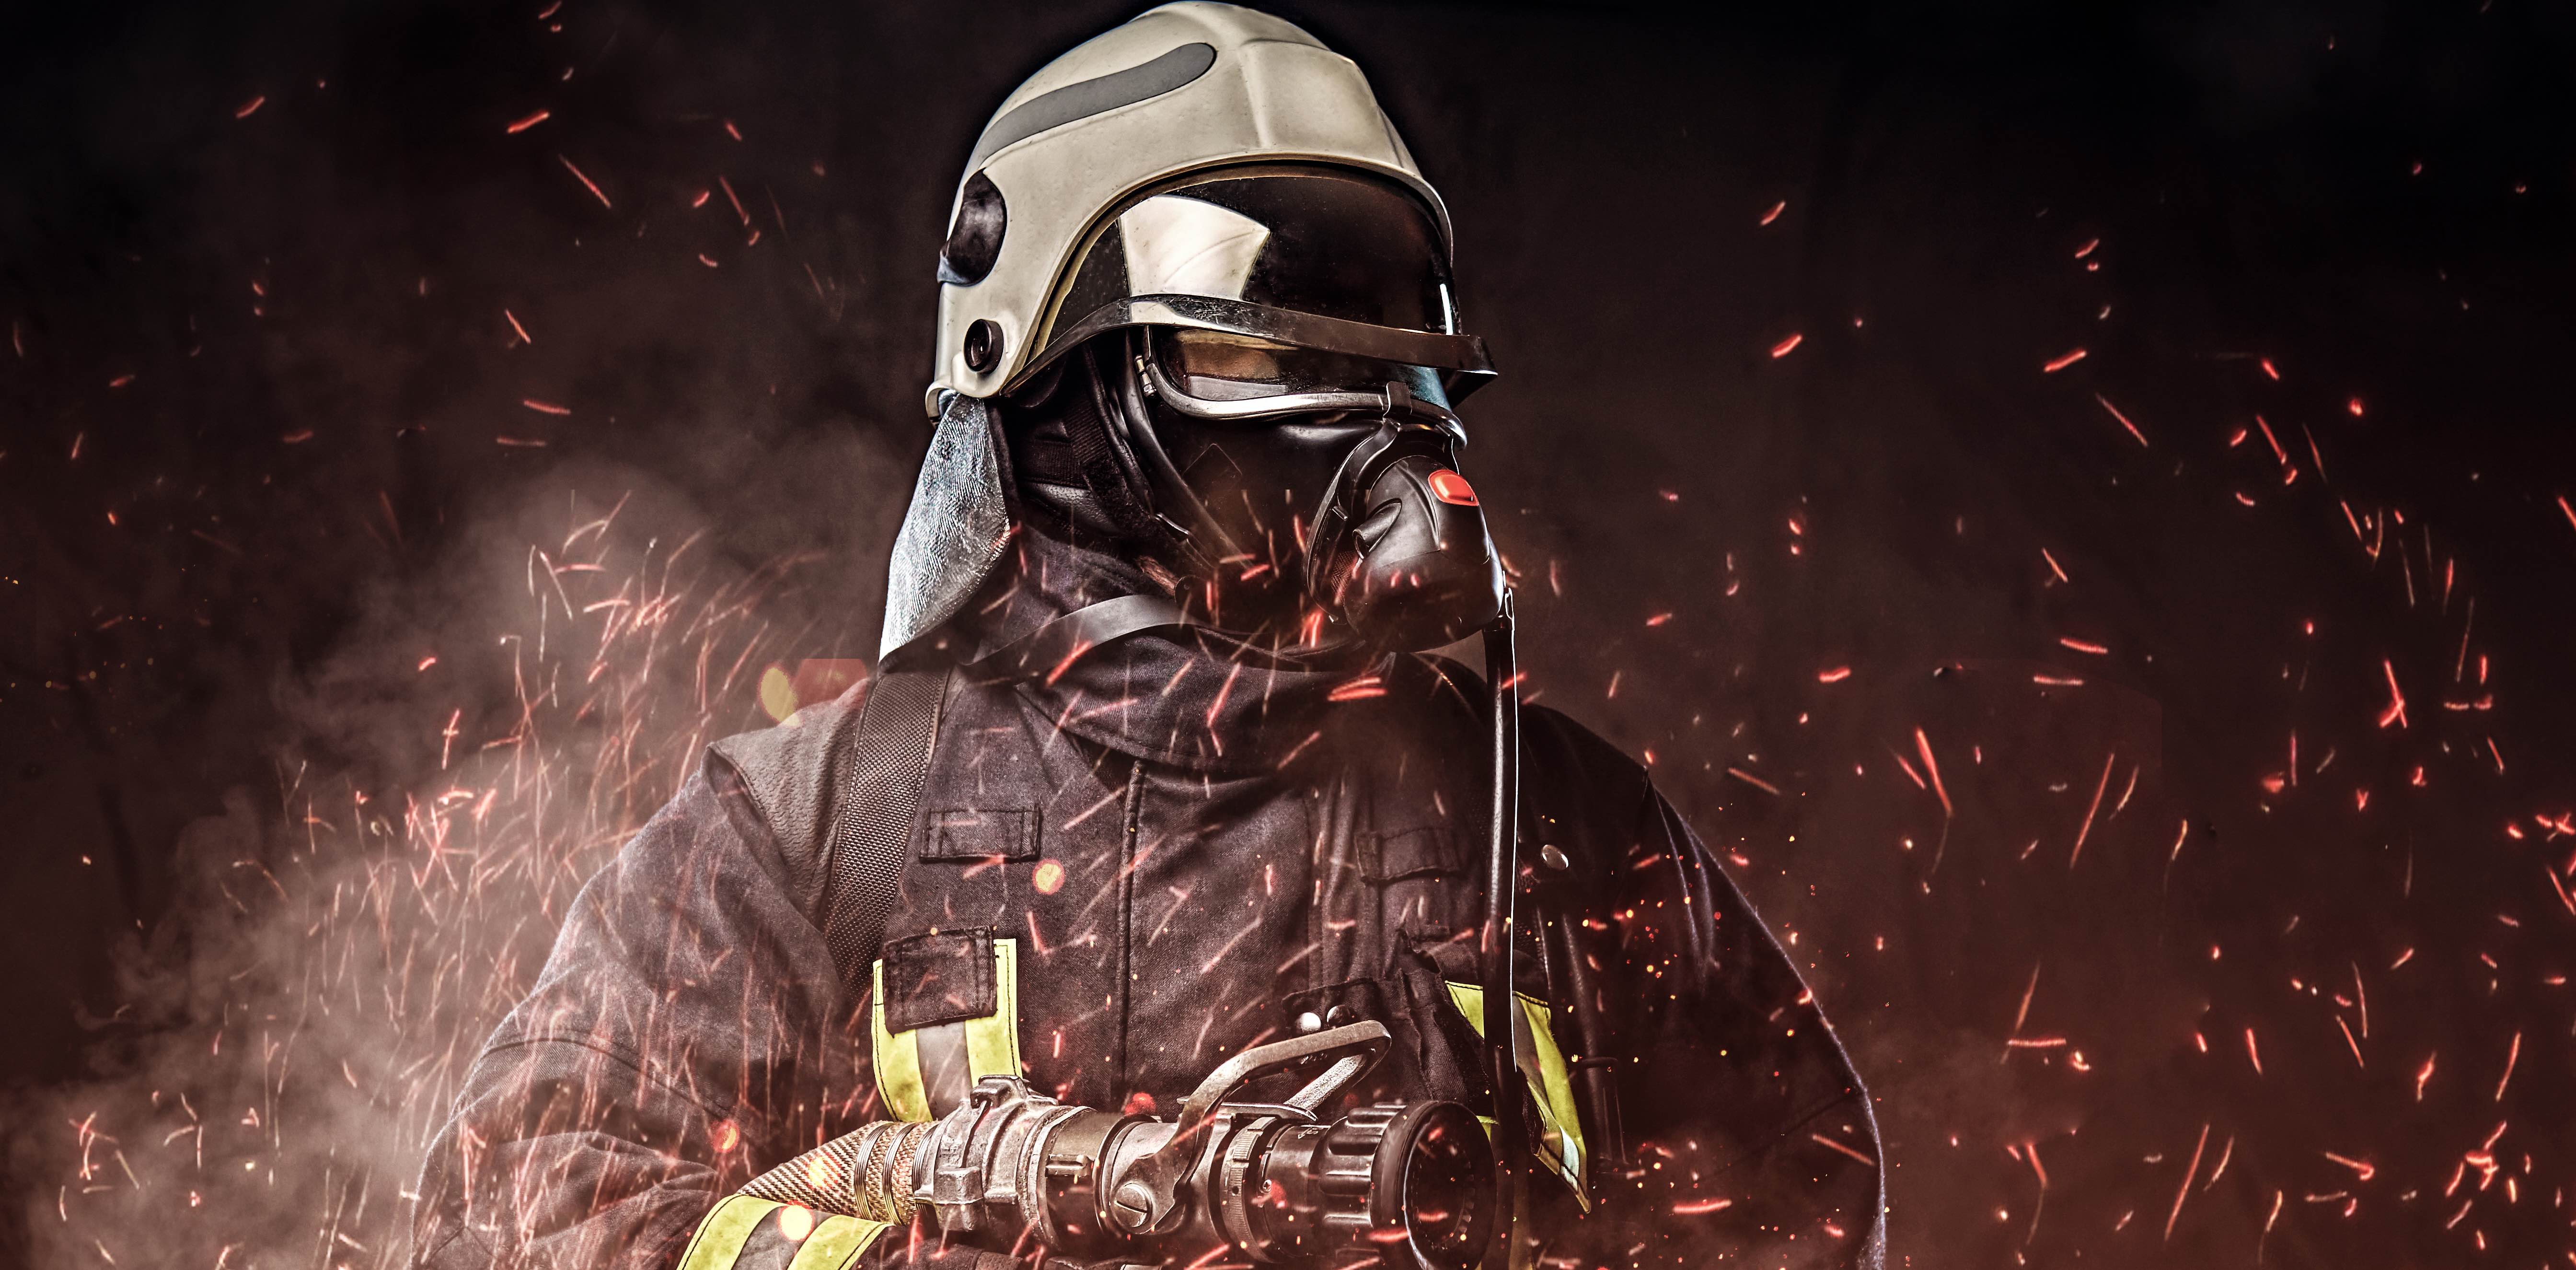 professional-firefighter-dressed-uniform-oxygen-mask-standing-fire-sparks-smoke-dark-background2